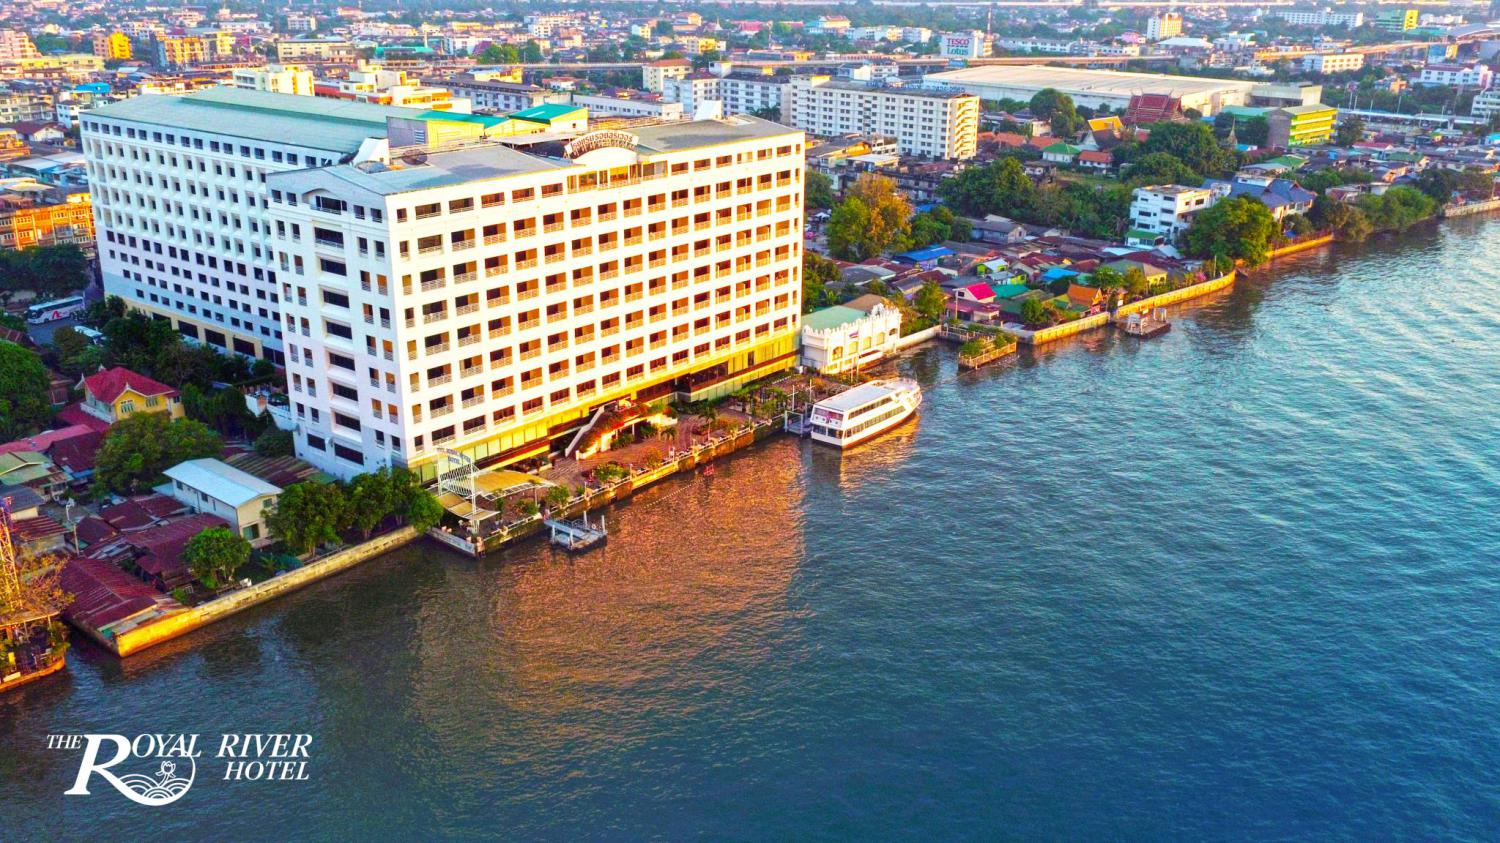 The Royal River Hotel - Image 0